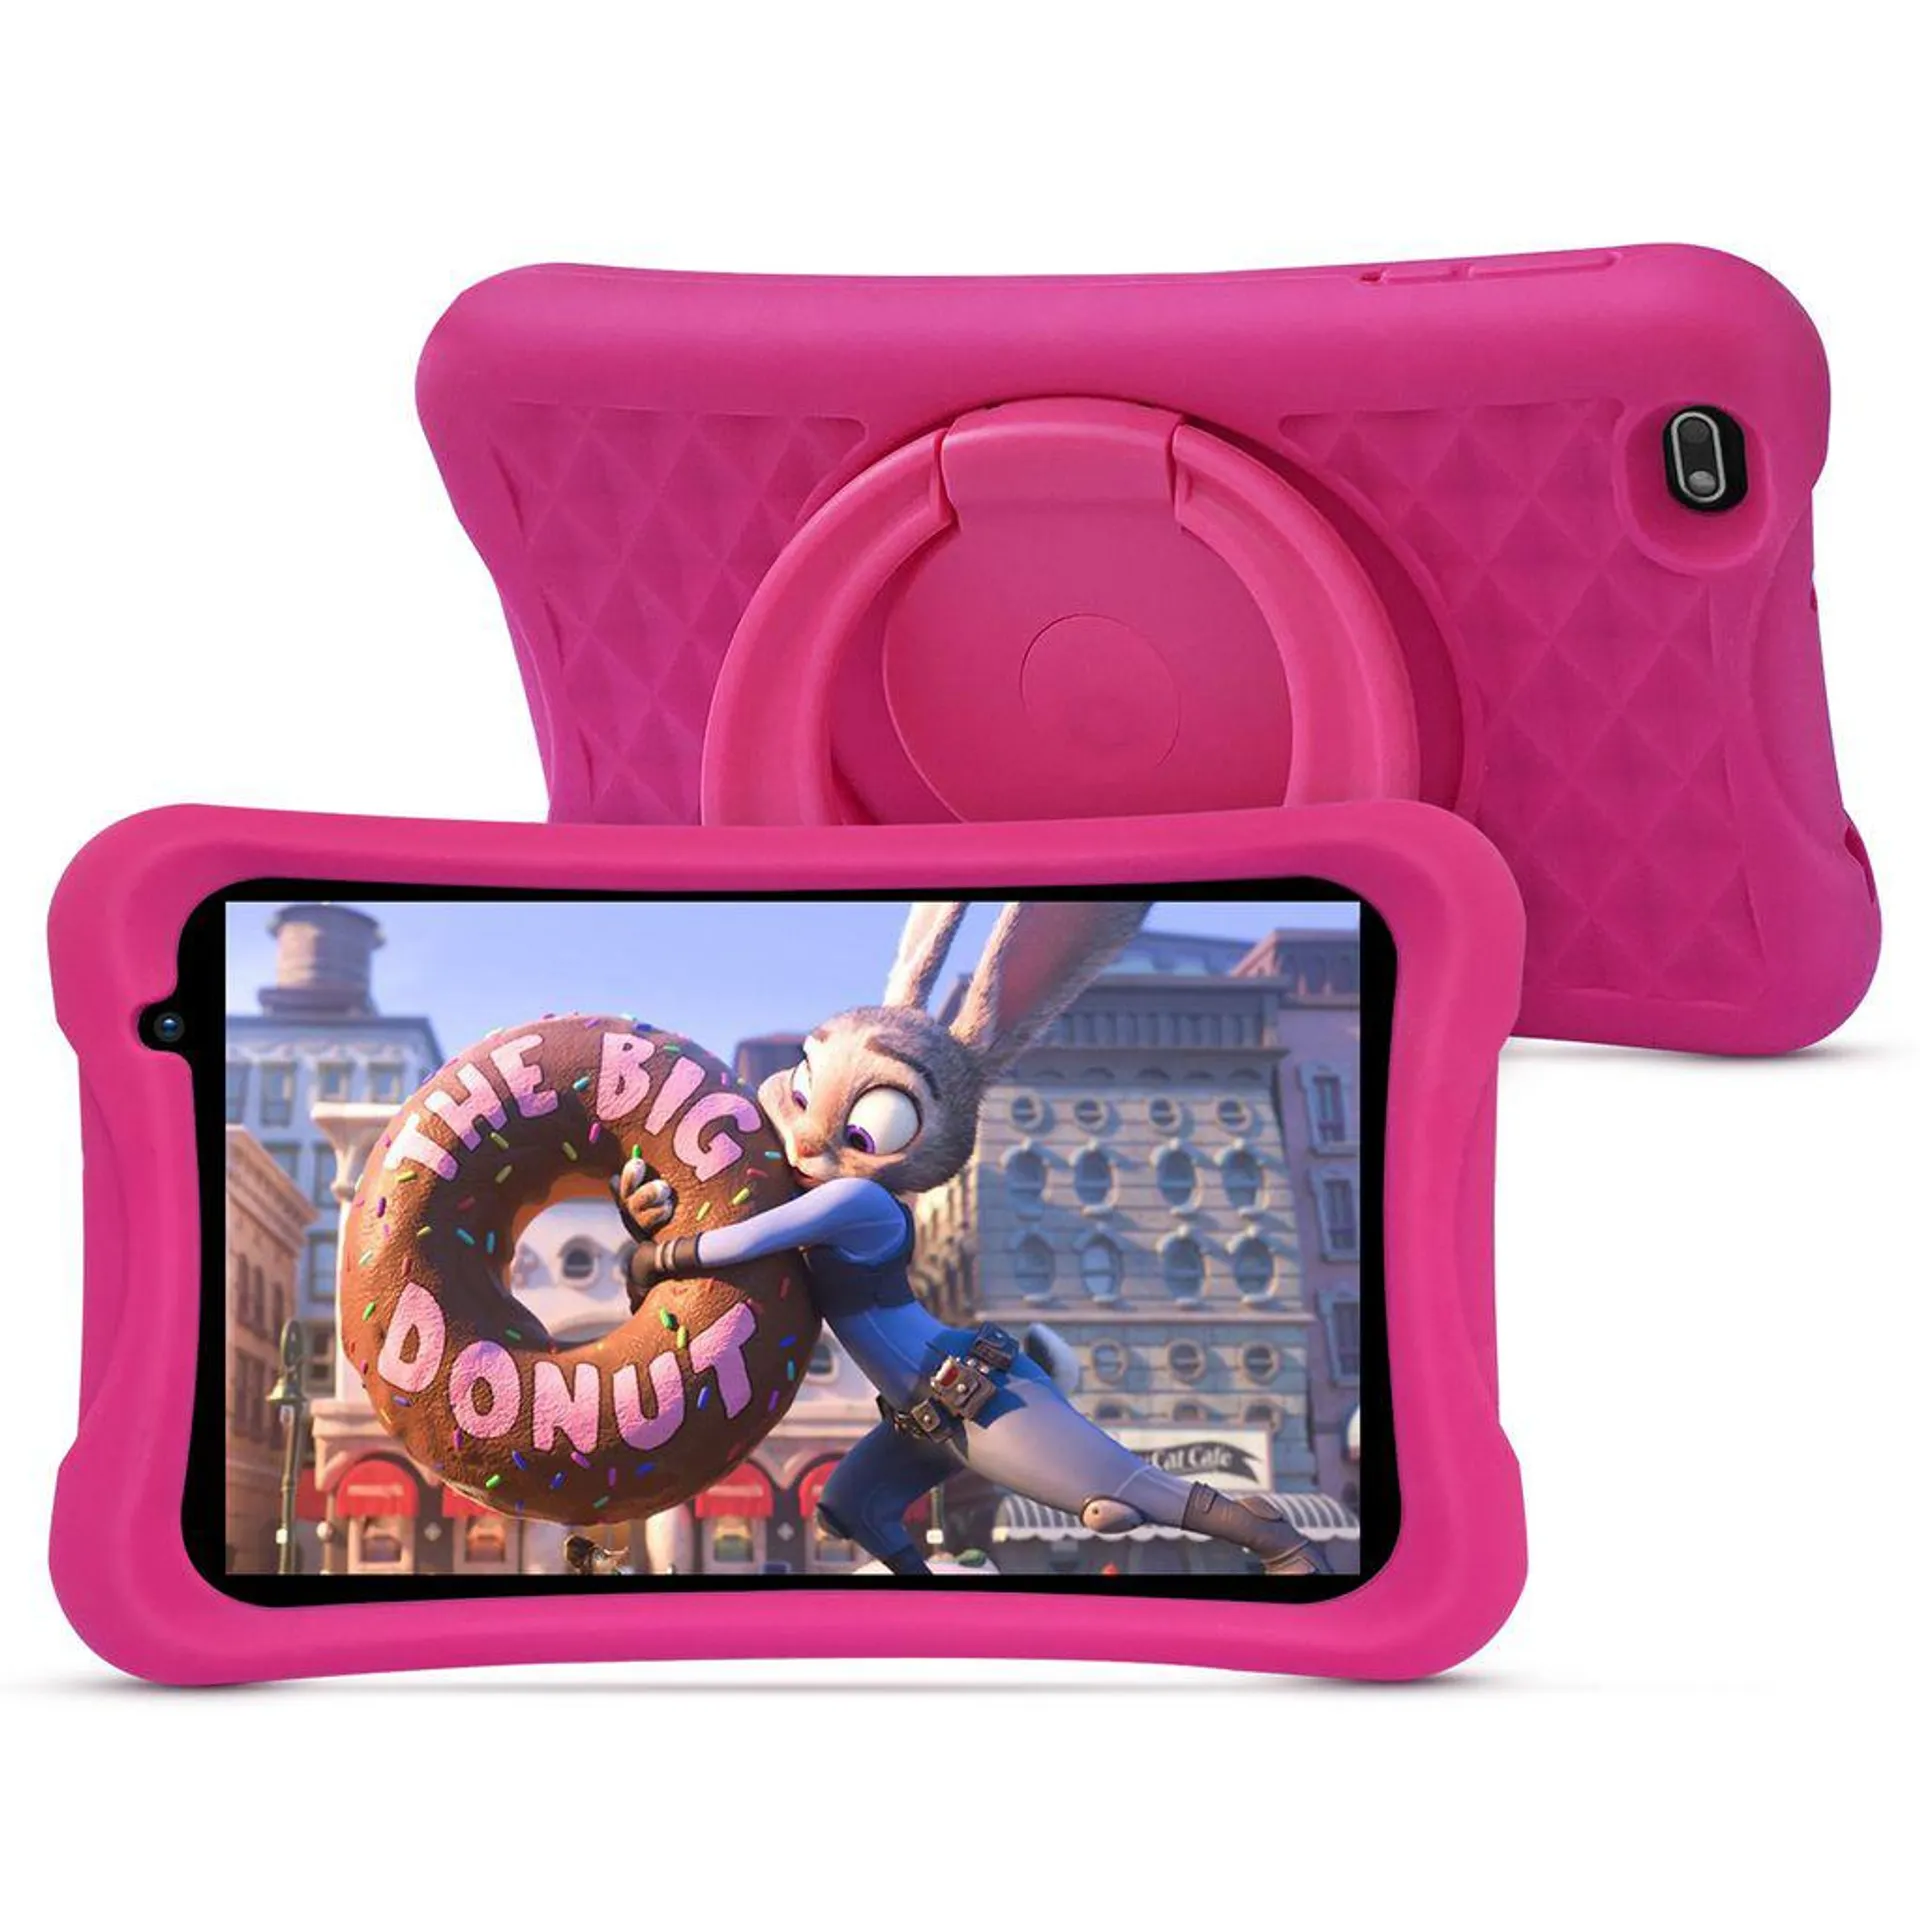 PRITOM L8 Kinder-Tablet, für Kinder von 2-12 Jahren, 8 Zoll HD-IPS-Display Android 10 Kinder-Tablet, Quad-Core-Prozessor, 2 GB RAM 32 GB ROM, 2.0 Frontkamera + 8.0 MP Rückfahrkamera, Rosa kindersichere Hülle